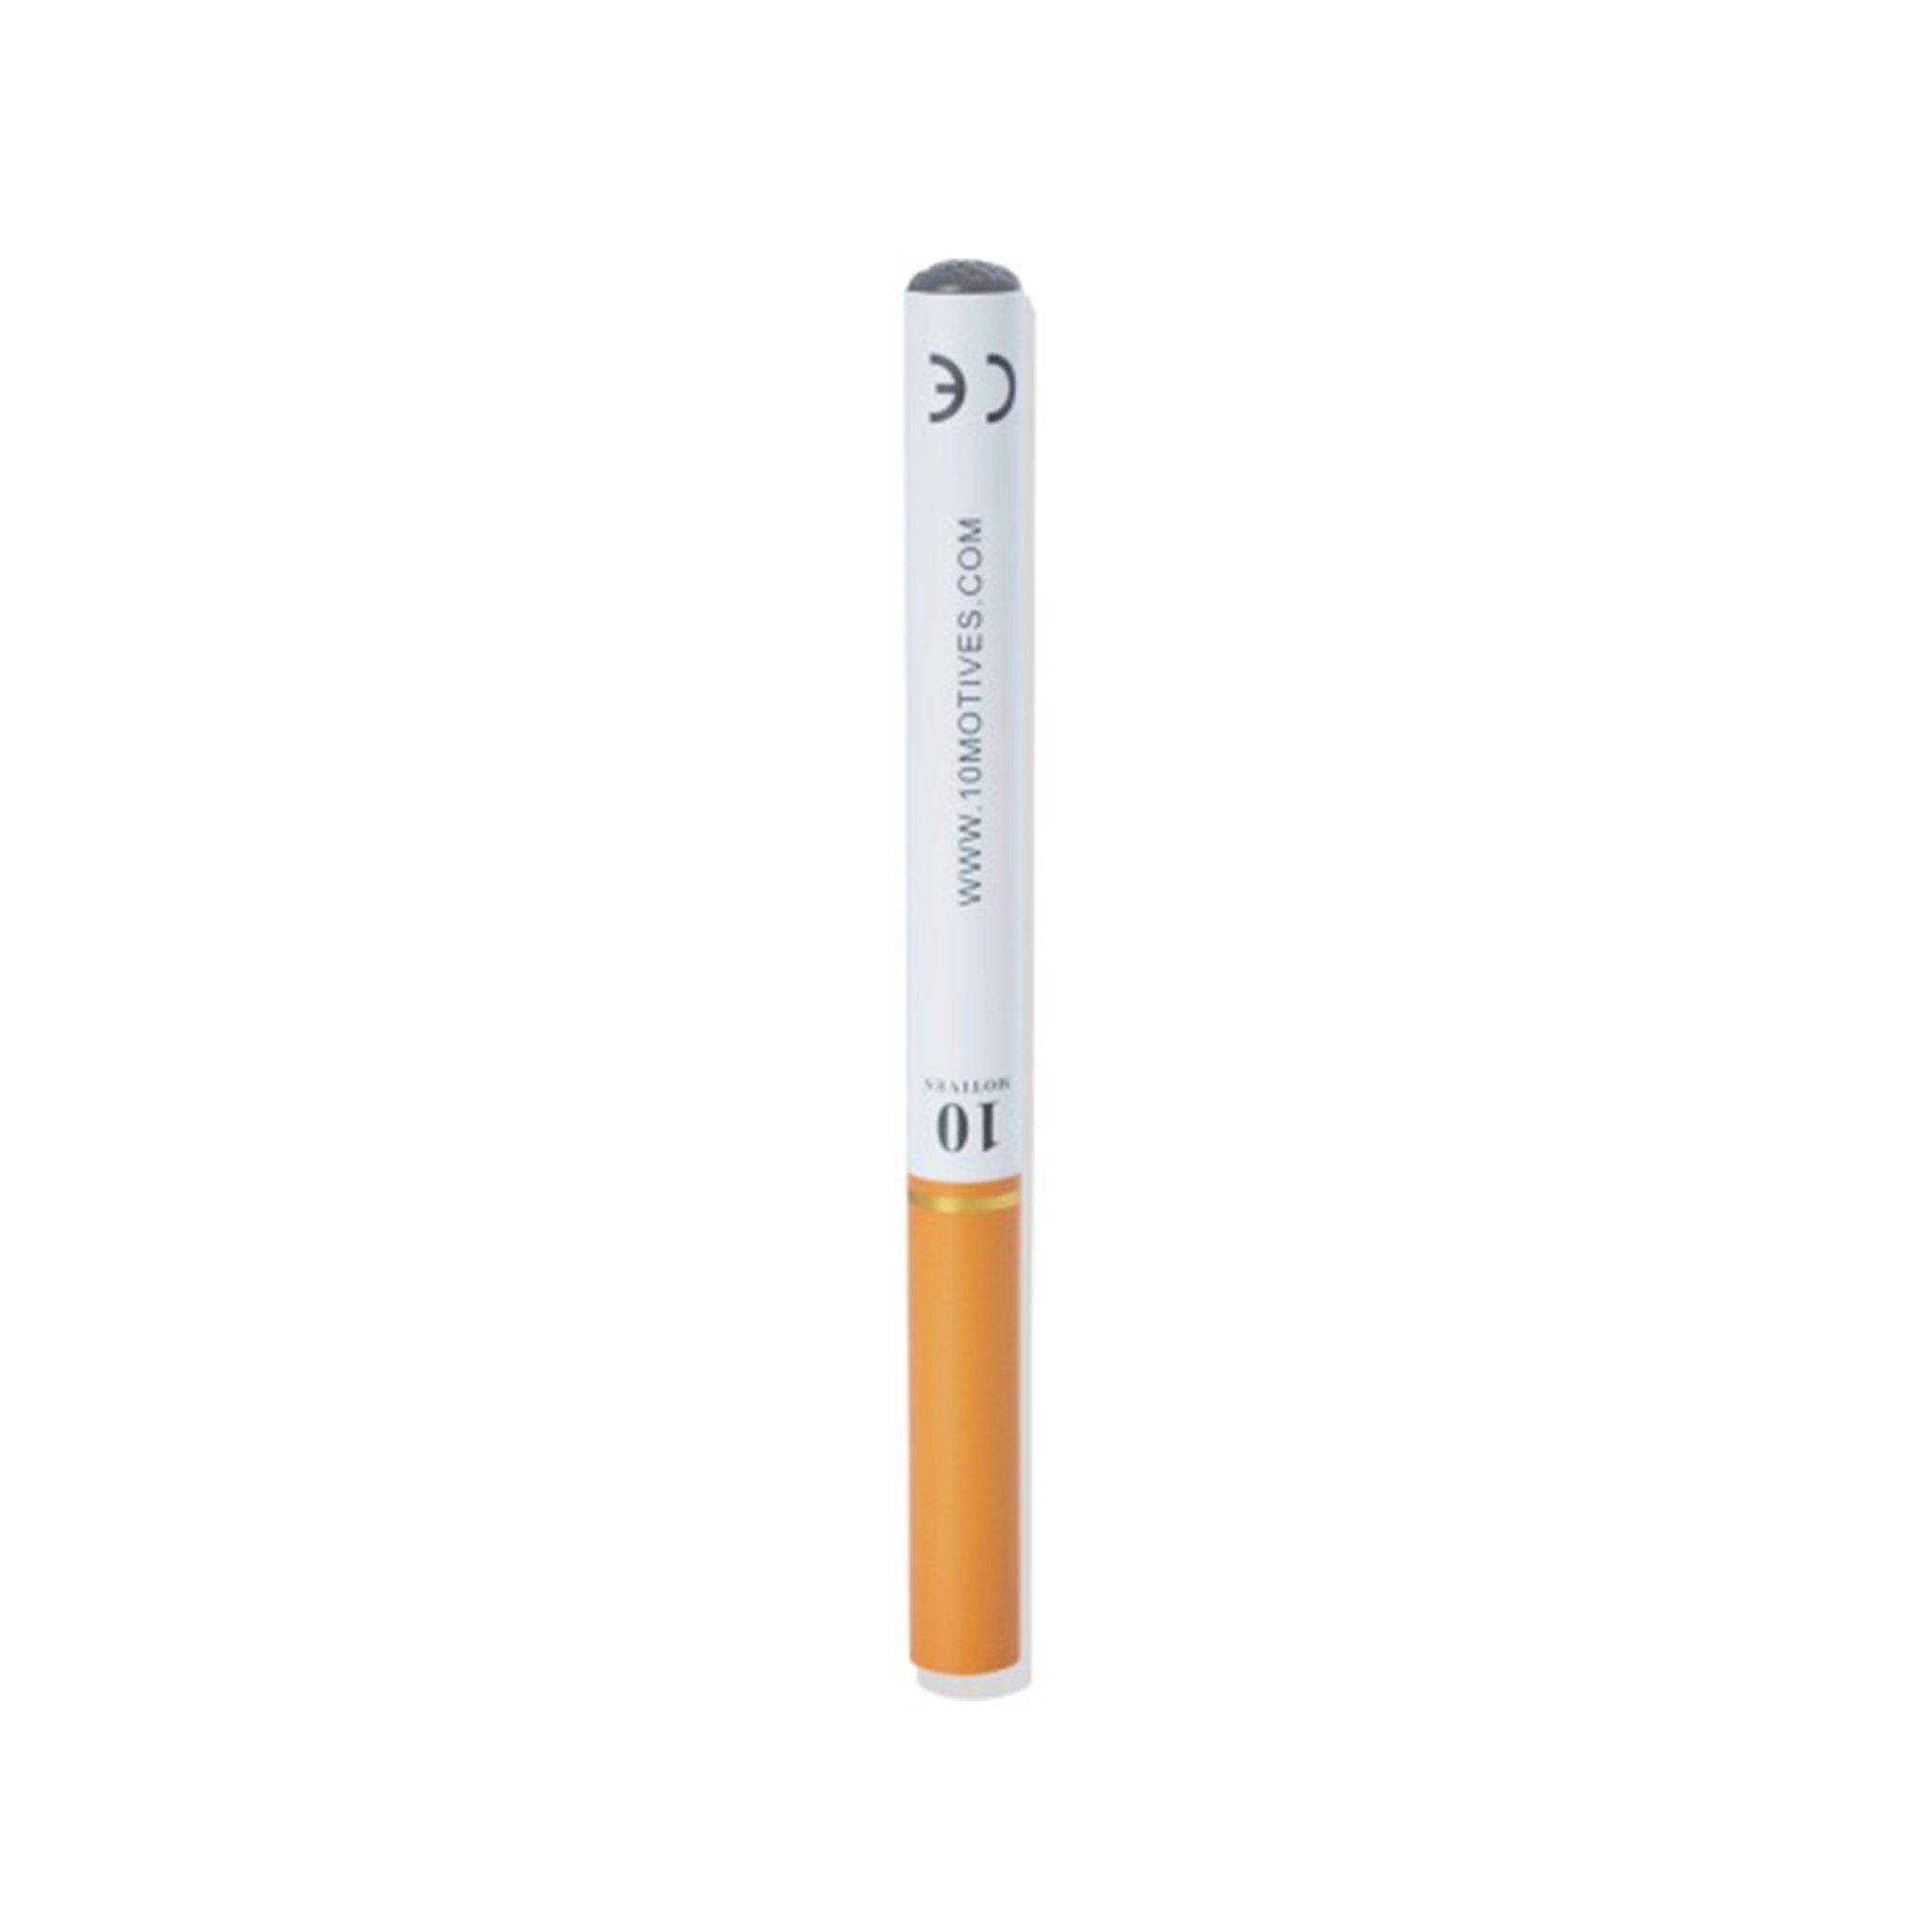 Ten Motives Rechargeable Electronic Cigarette